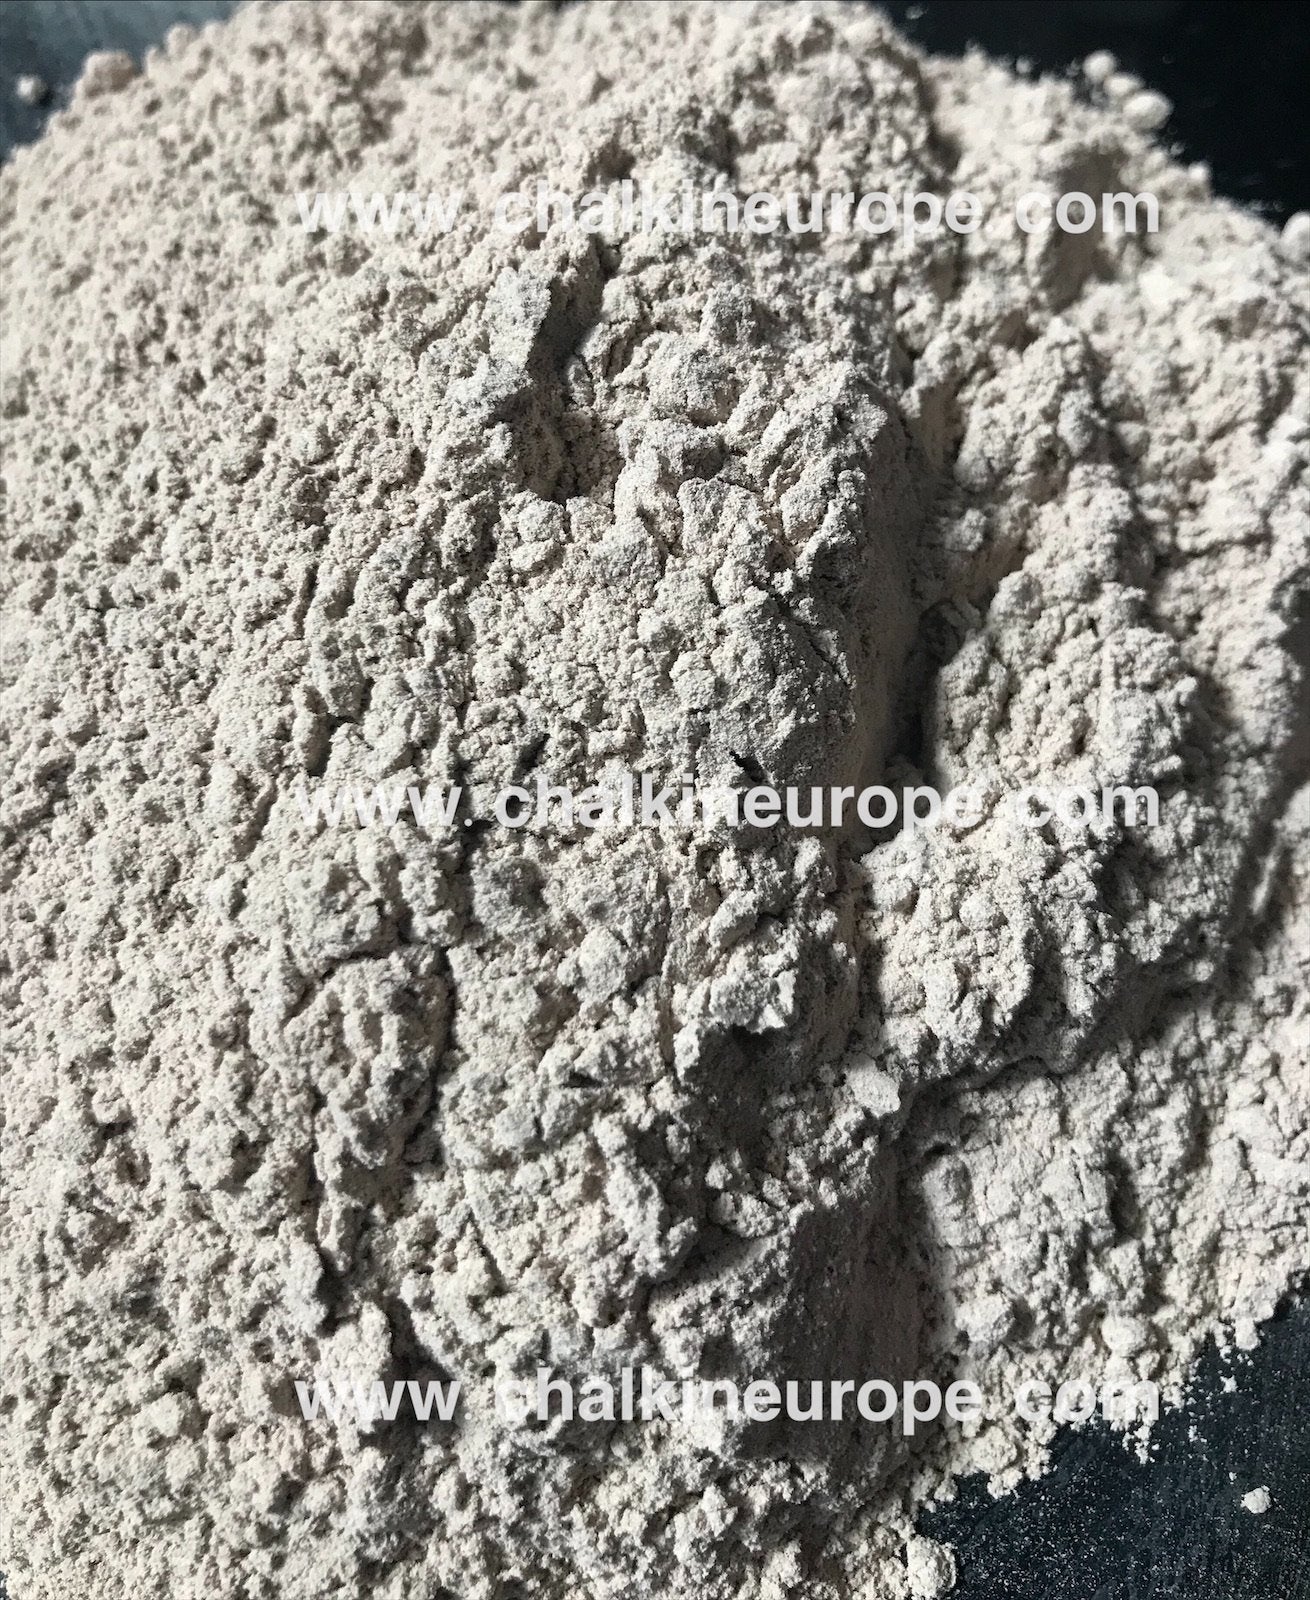 Edible Bentonite Clay - Chalkineurope